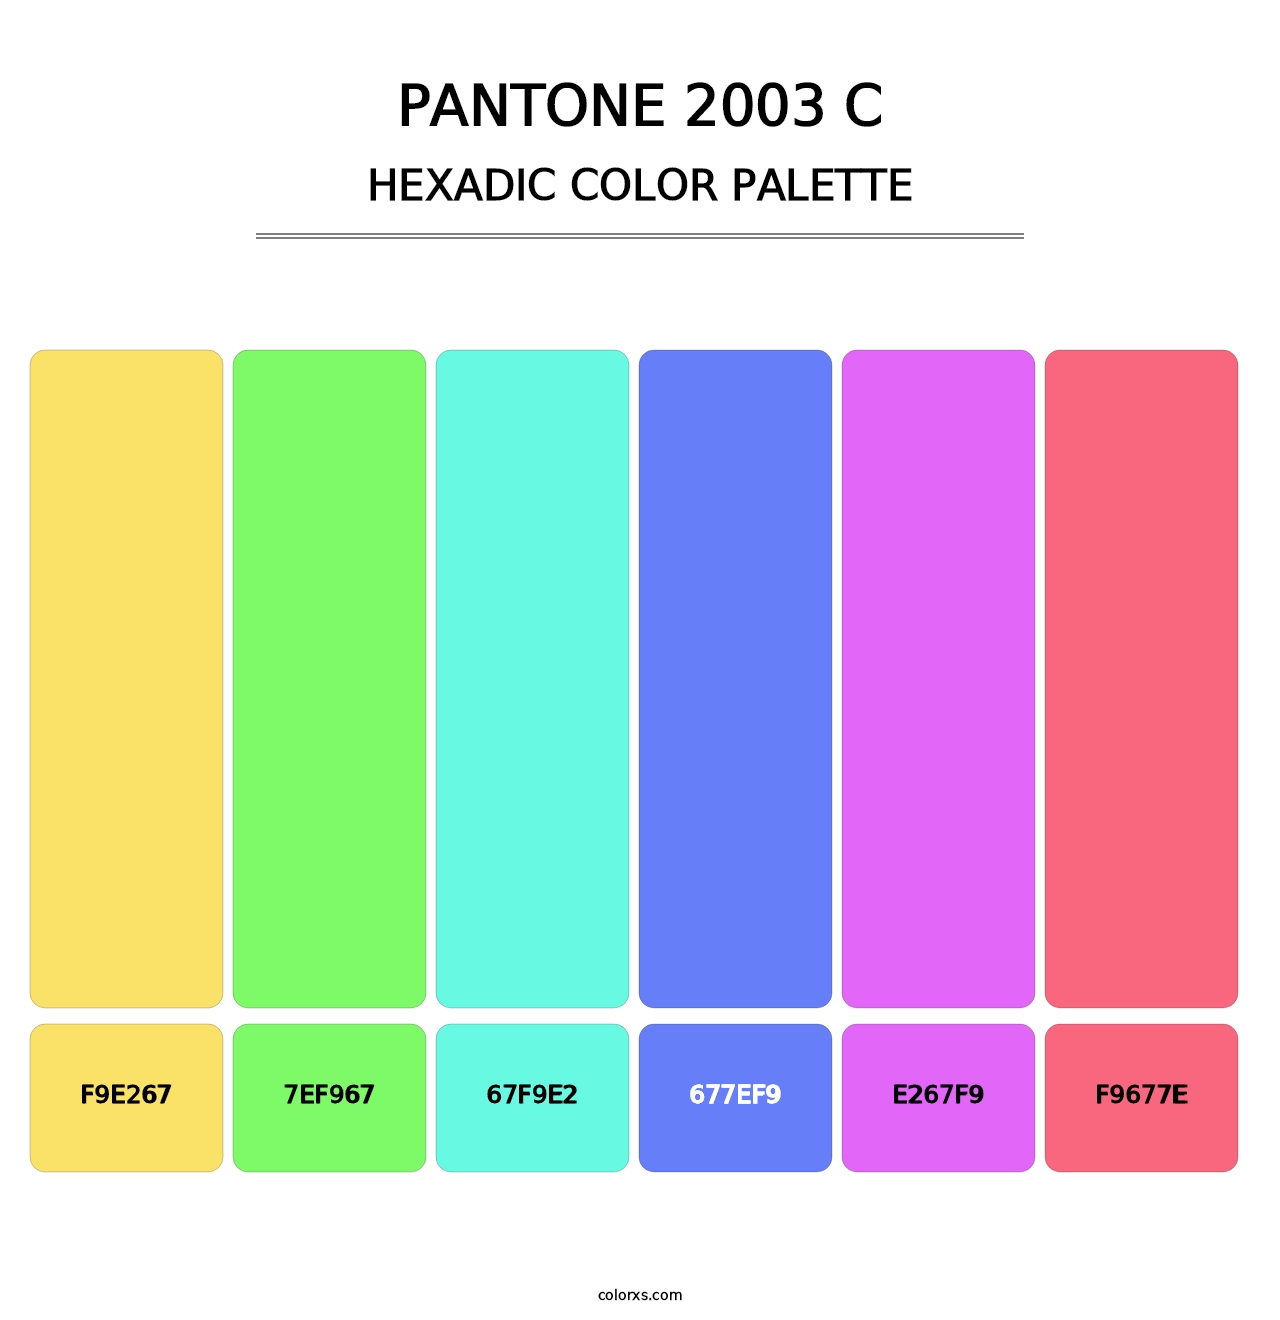 PANTONE 2003 C - Hexadic Color Palette